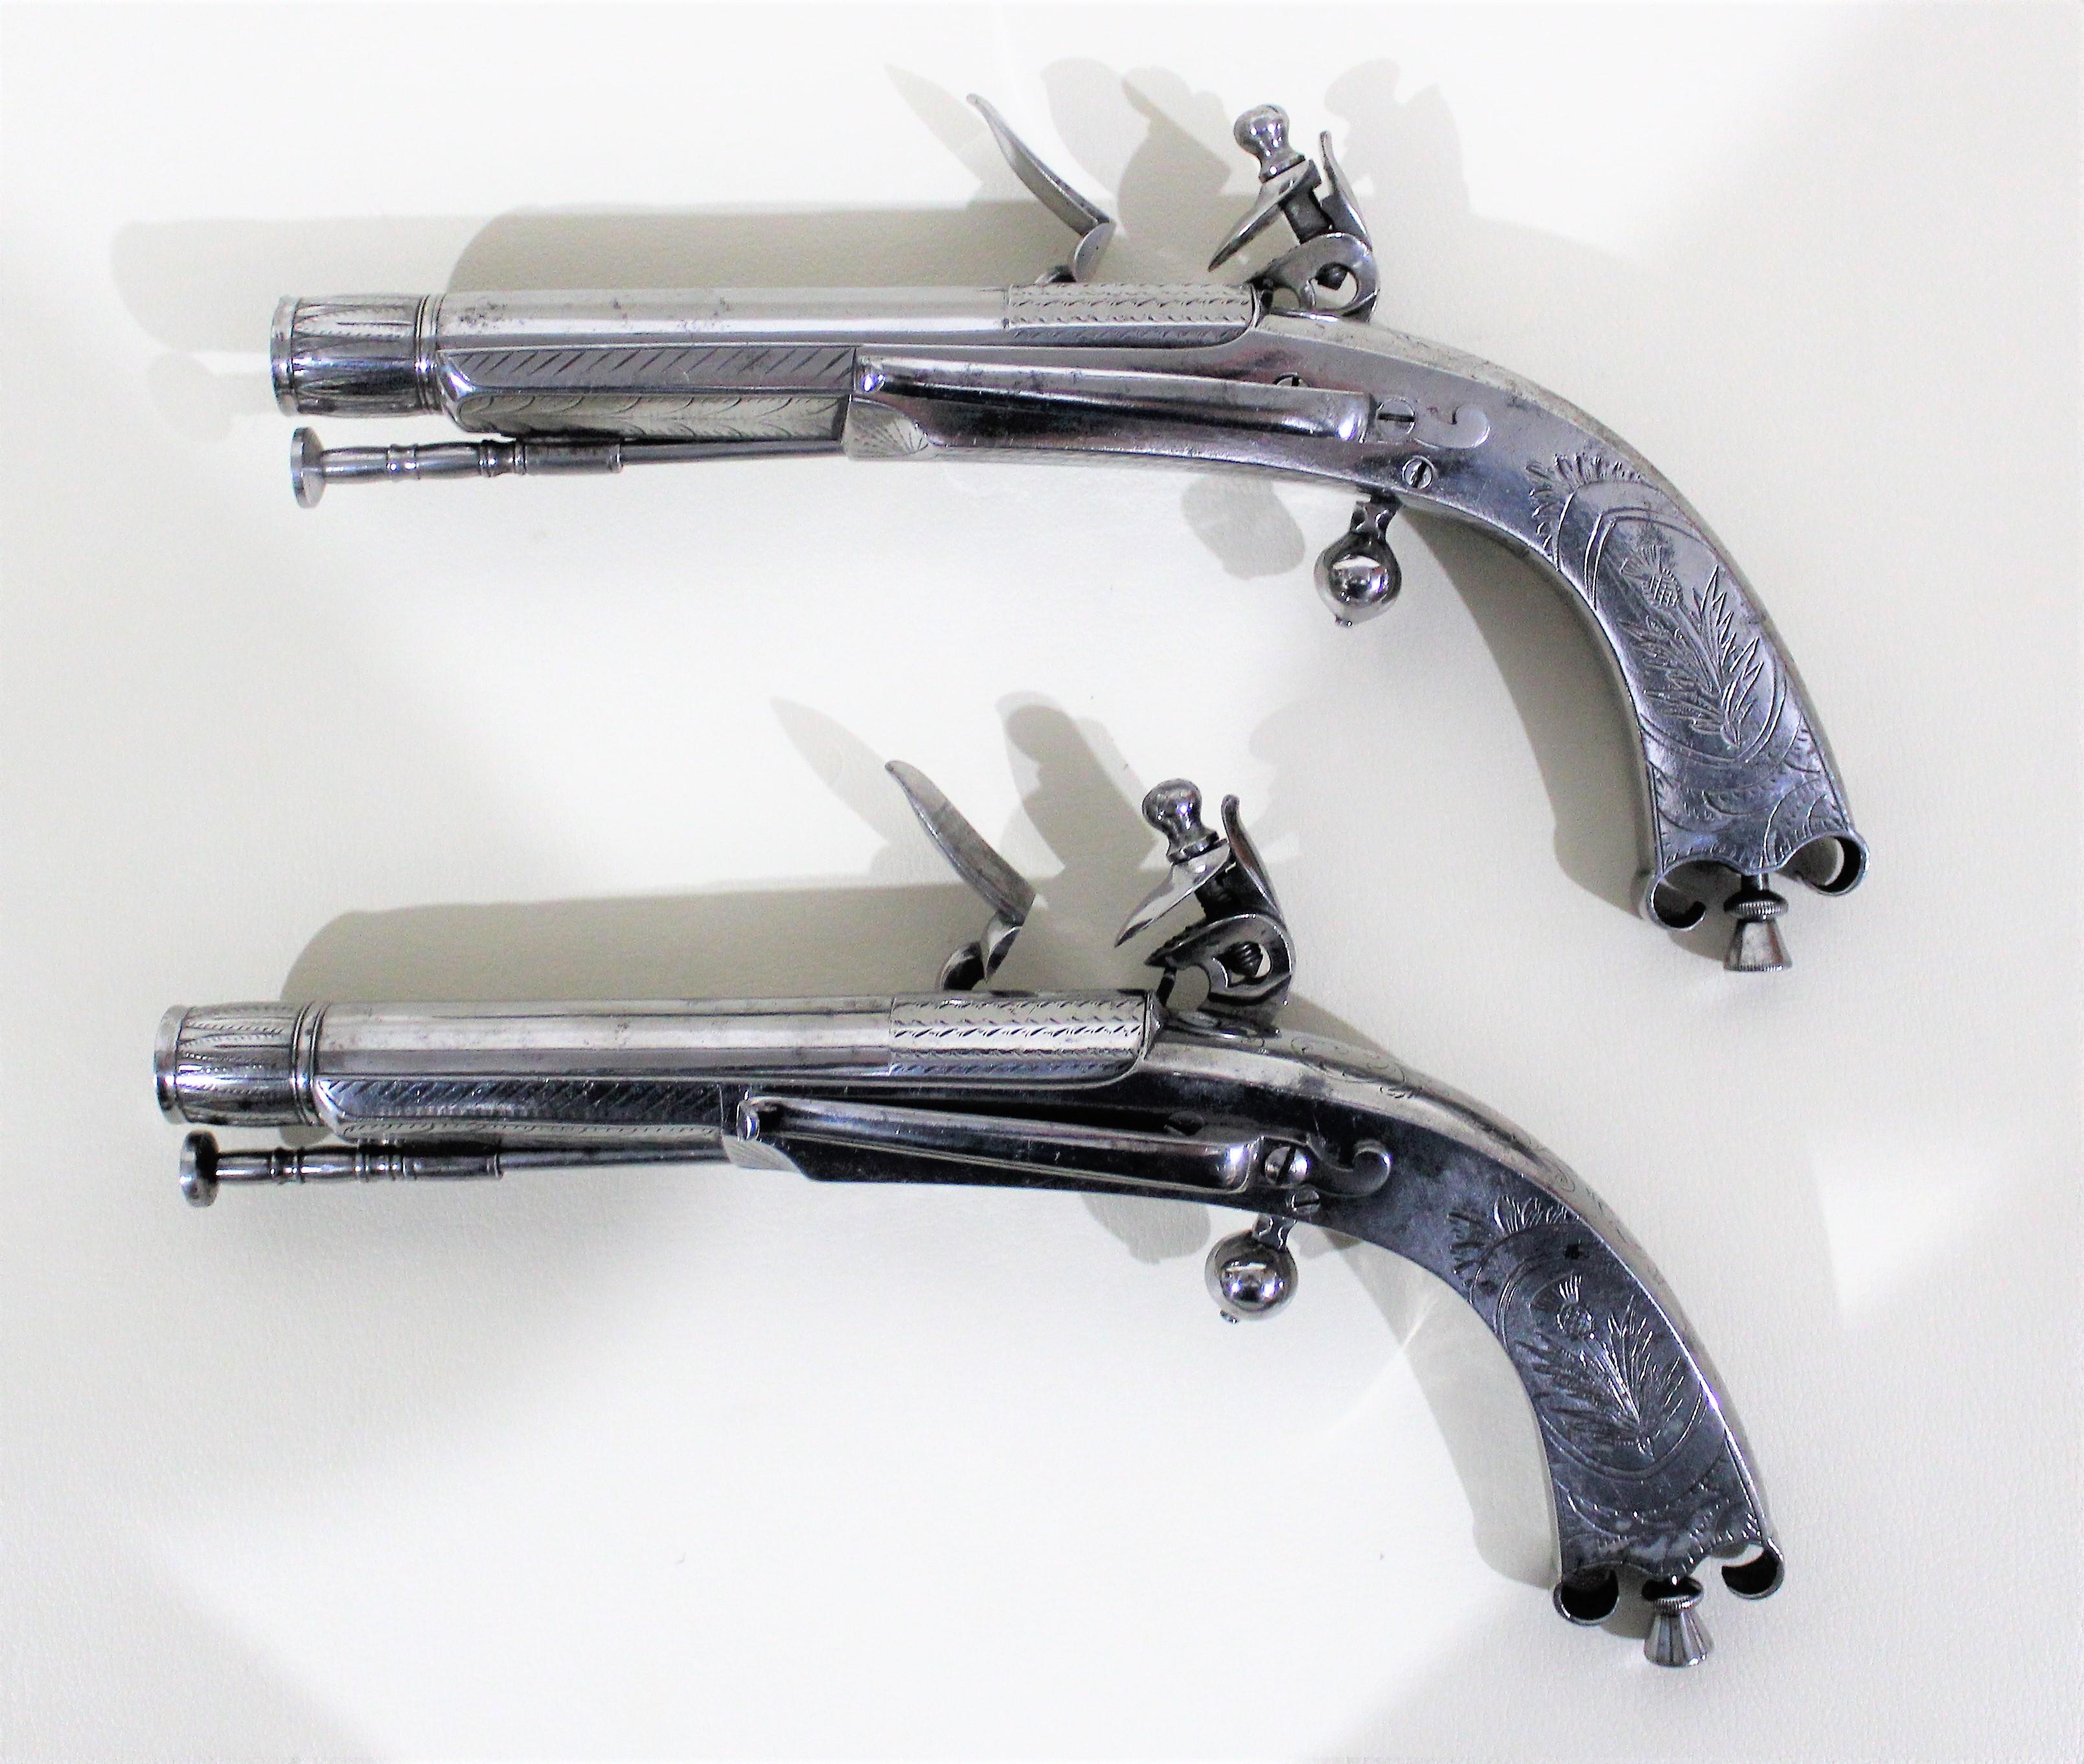 A fine pair of 18th century Scottish steel flintlock belt pistols by Macleod. These 'Highland Pistols